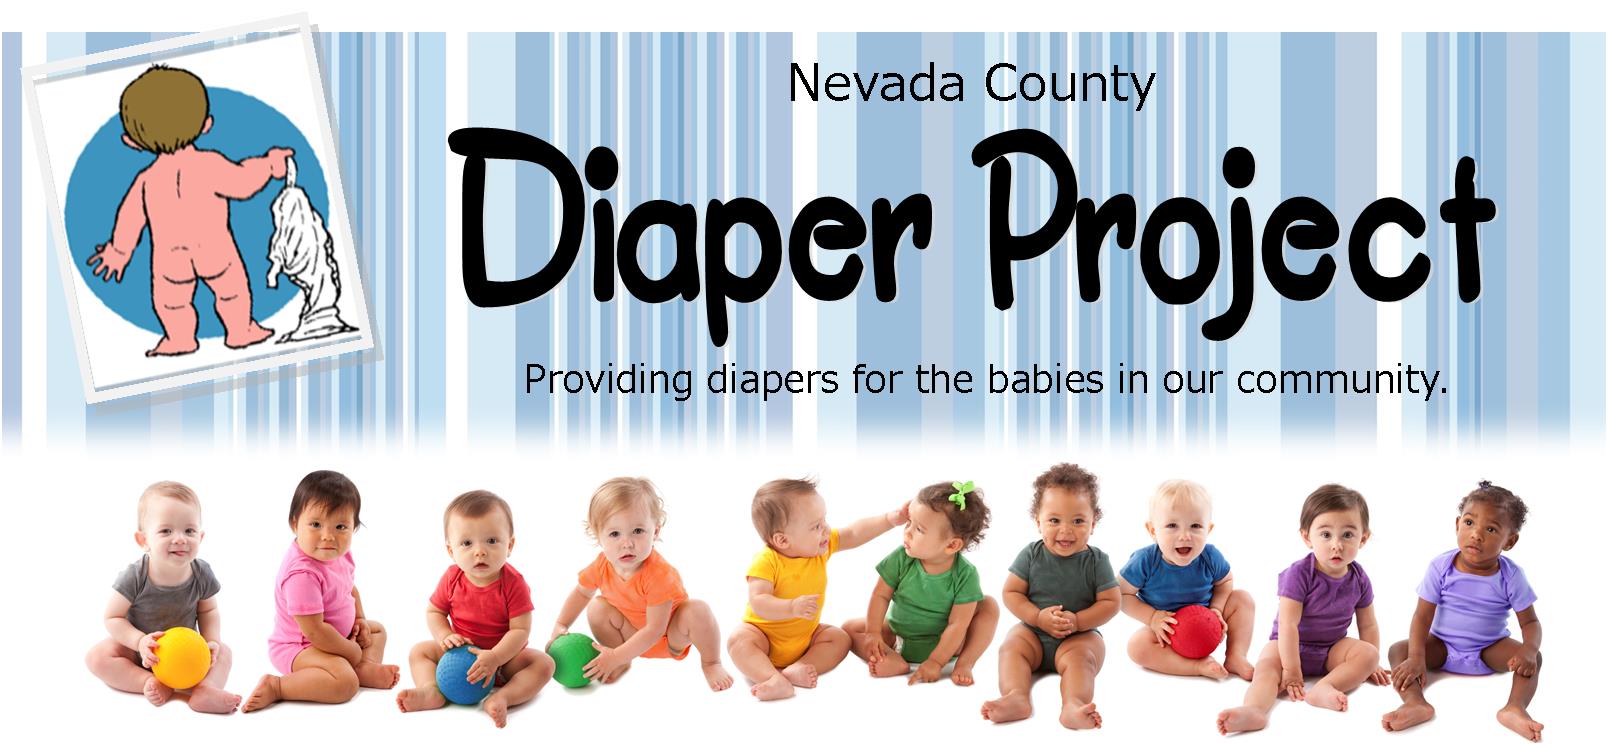 Nevada County Diaper Project